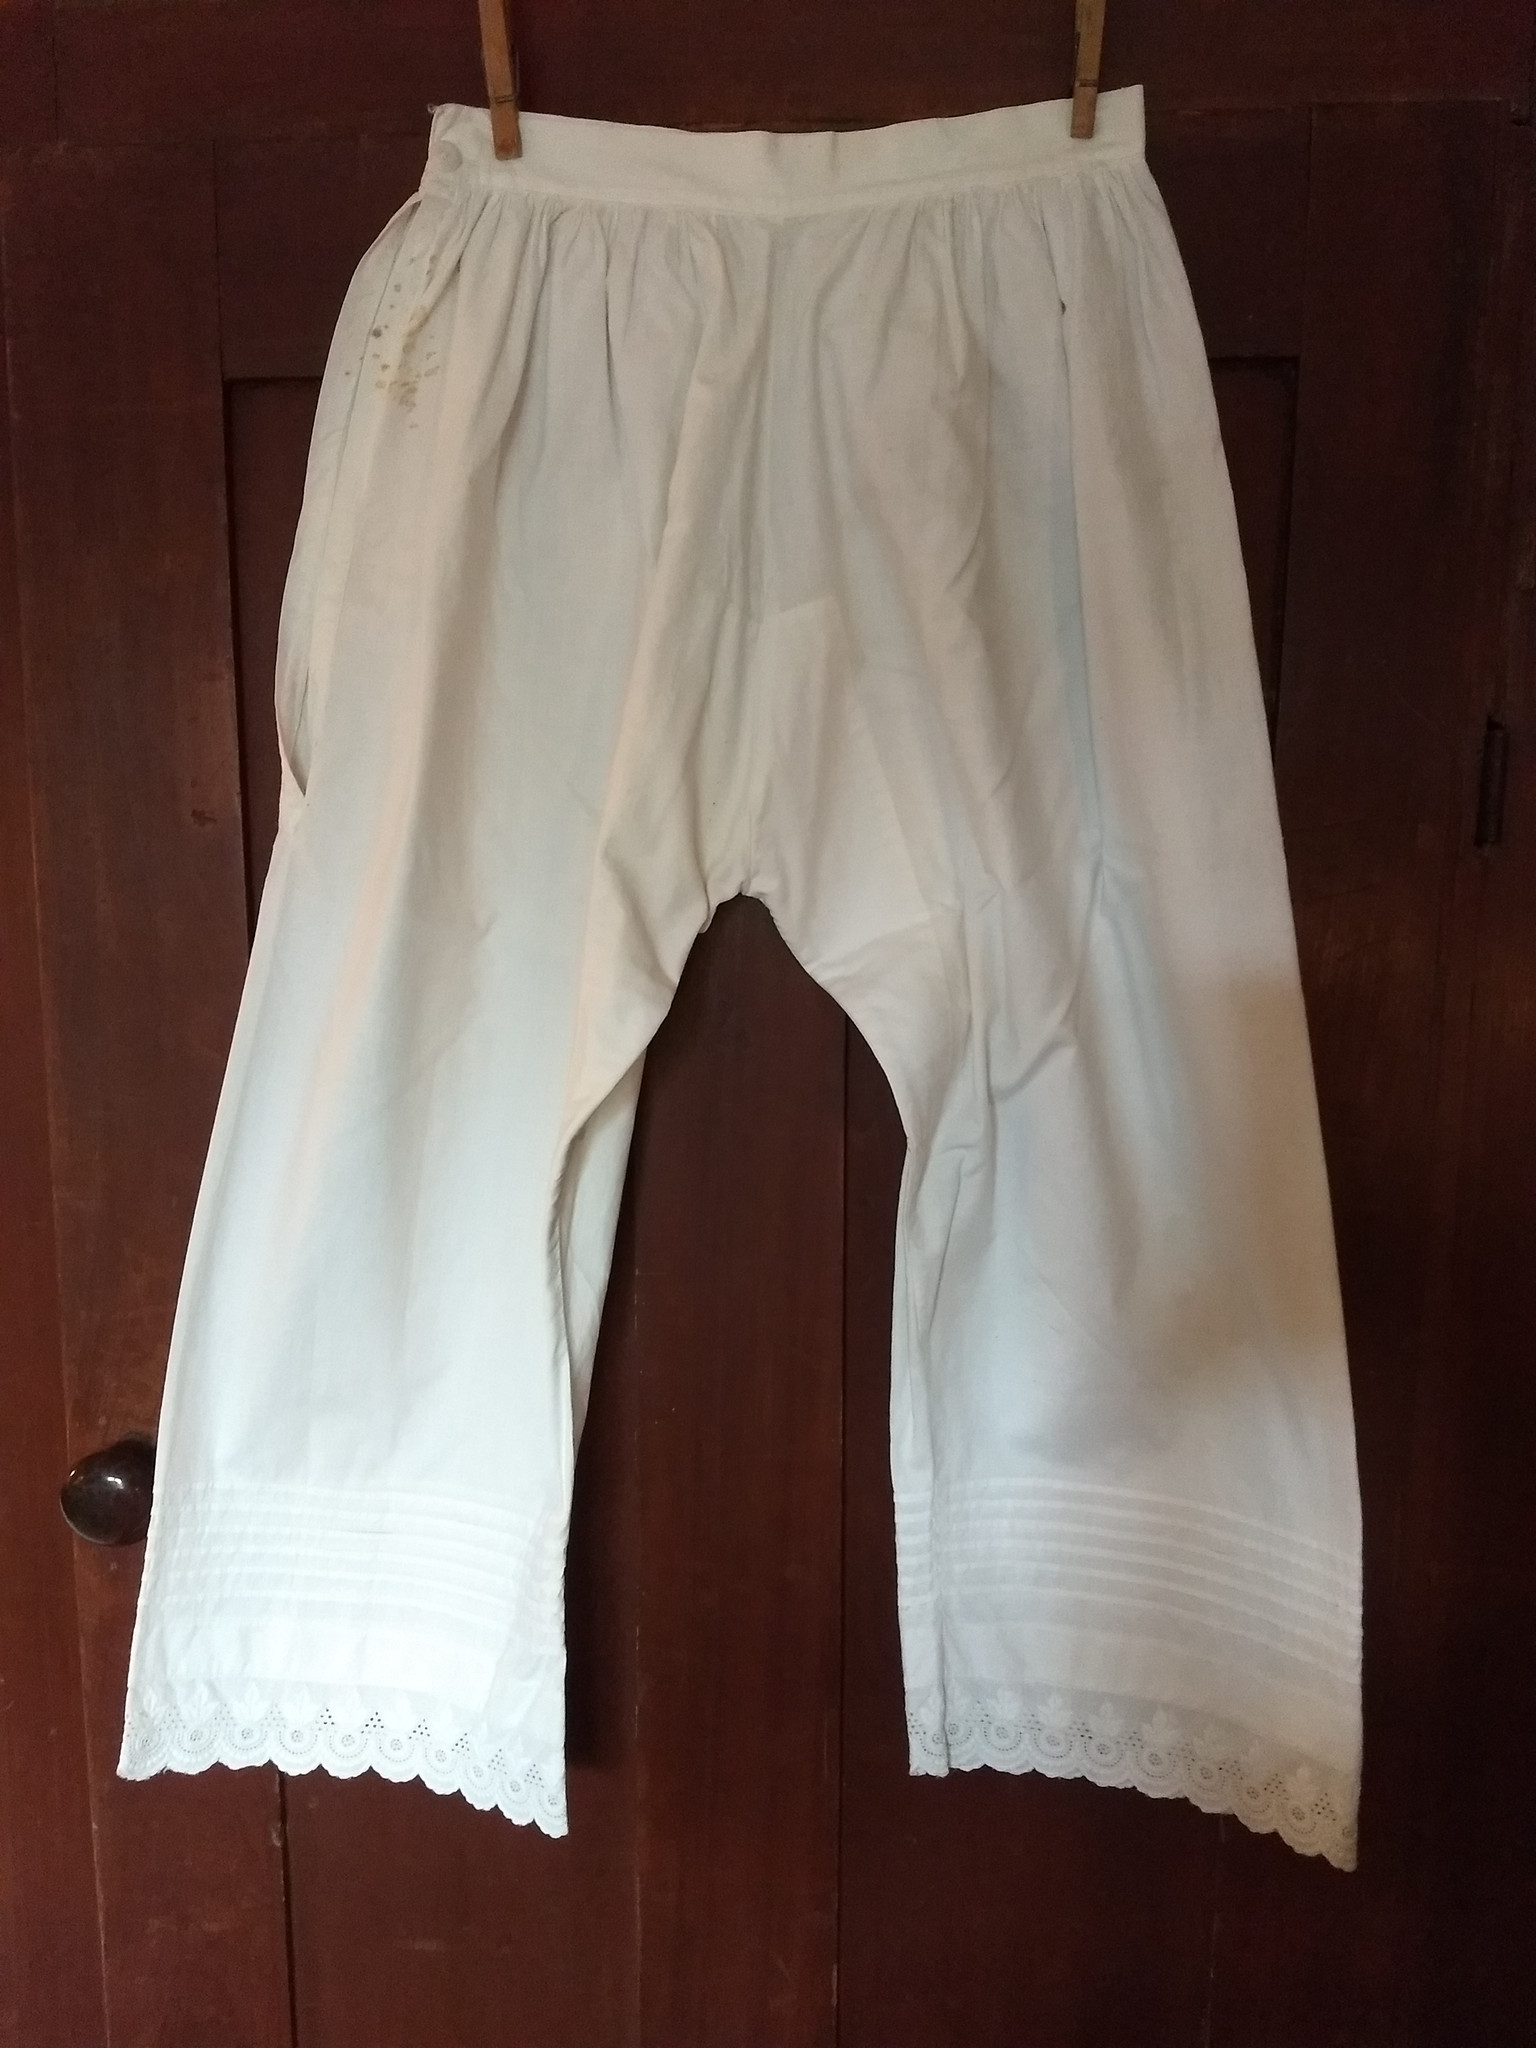 Victorian Pantaloons, Victorian Nightwear, 1900s Undergarments